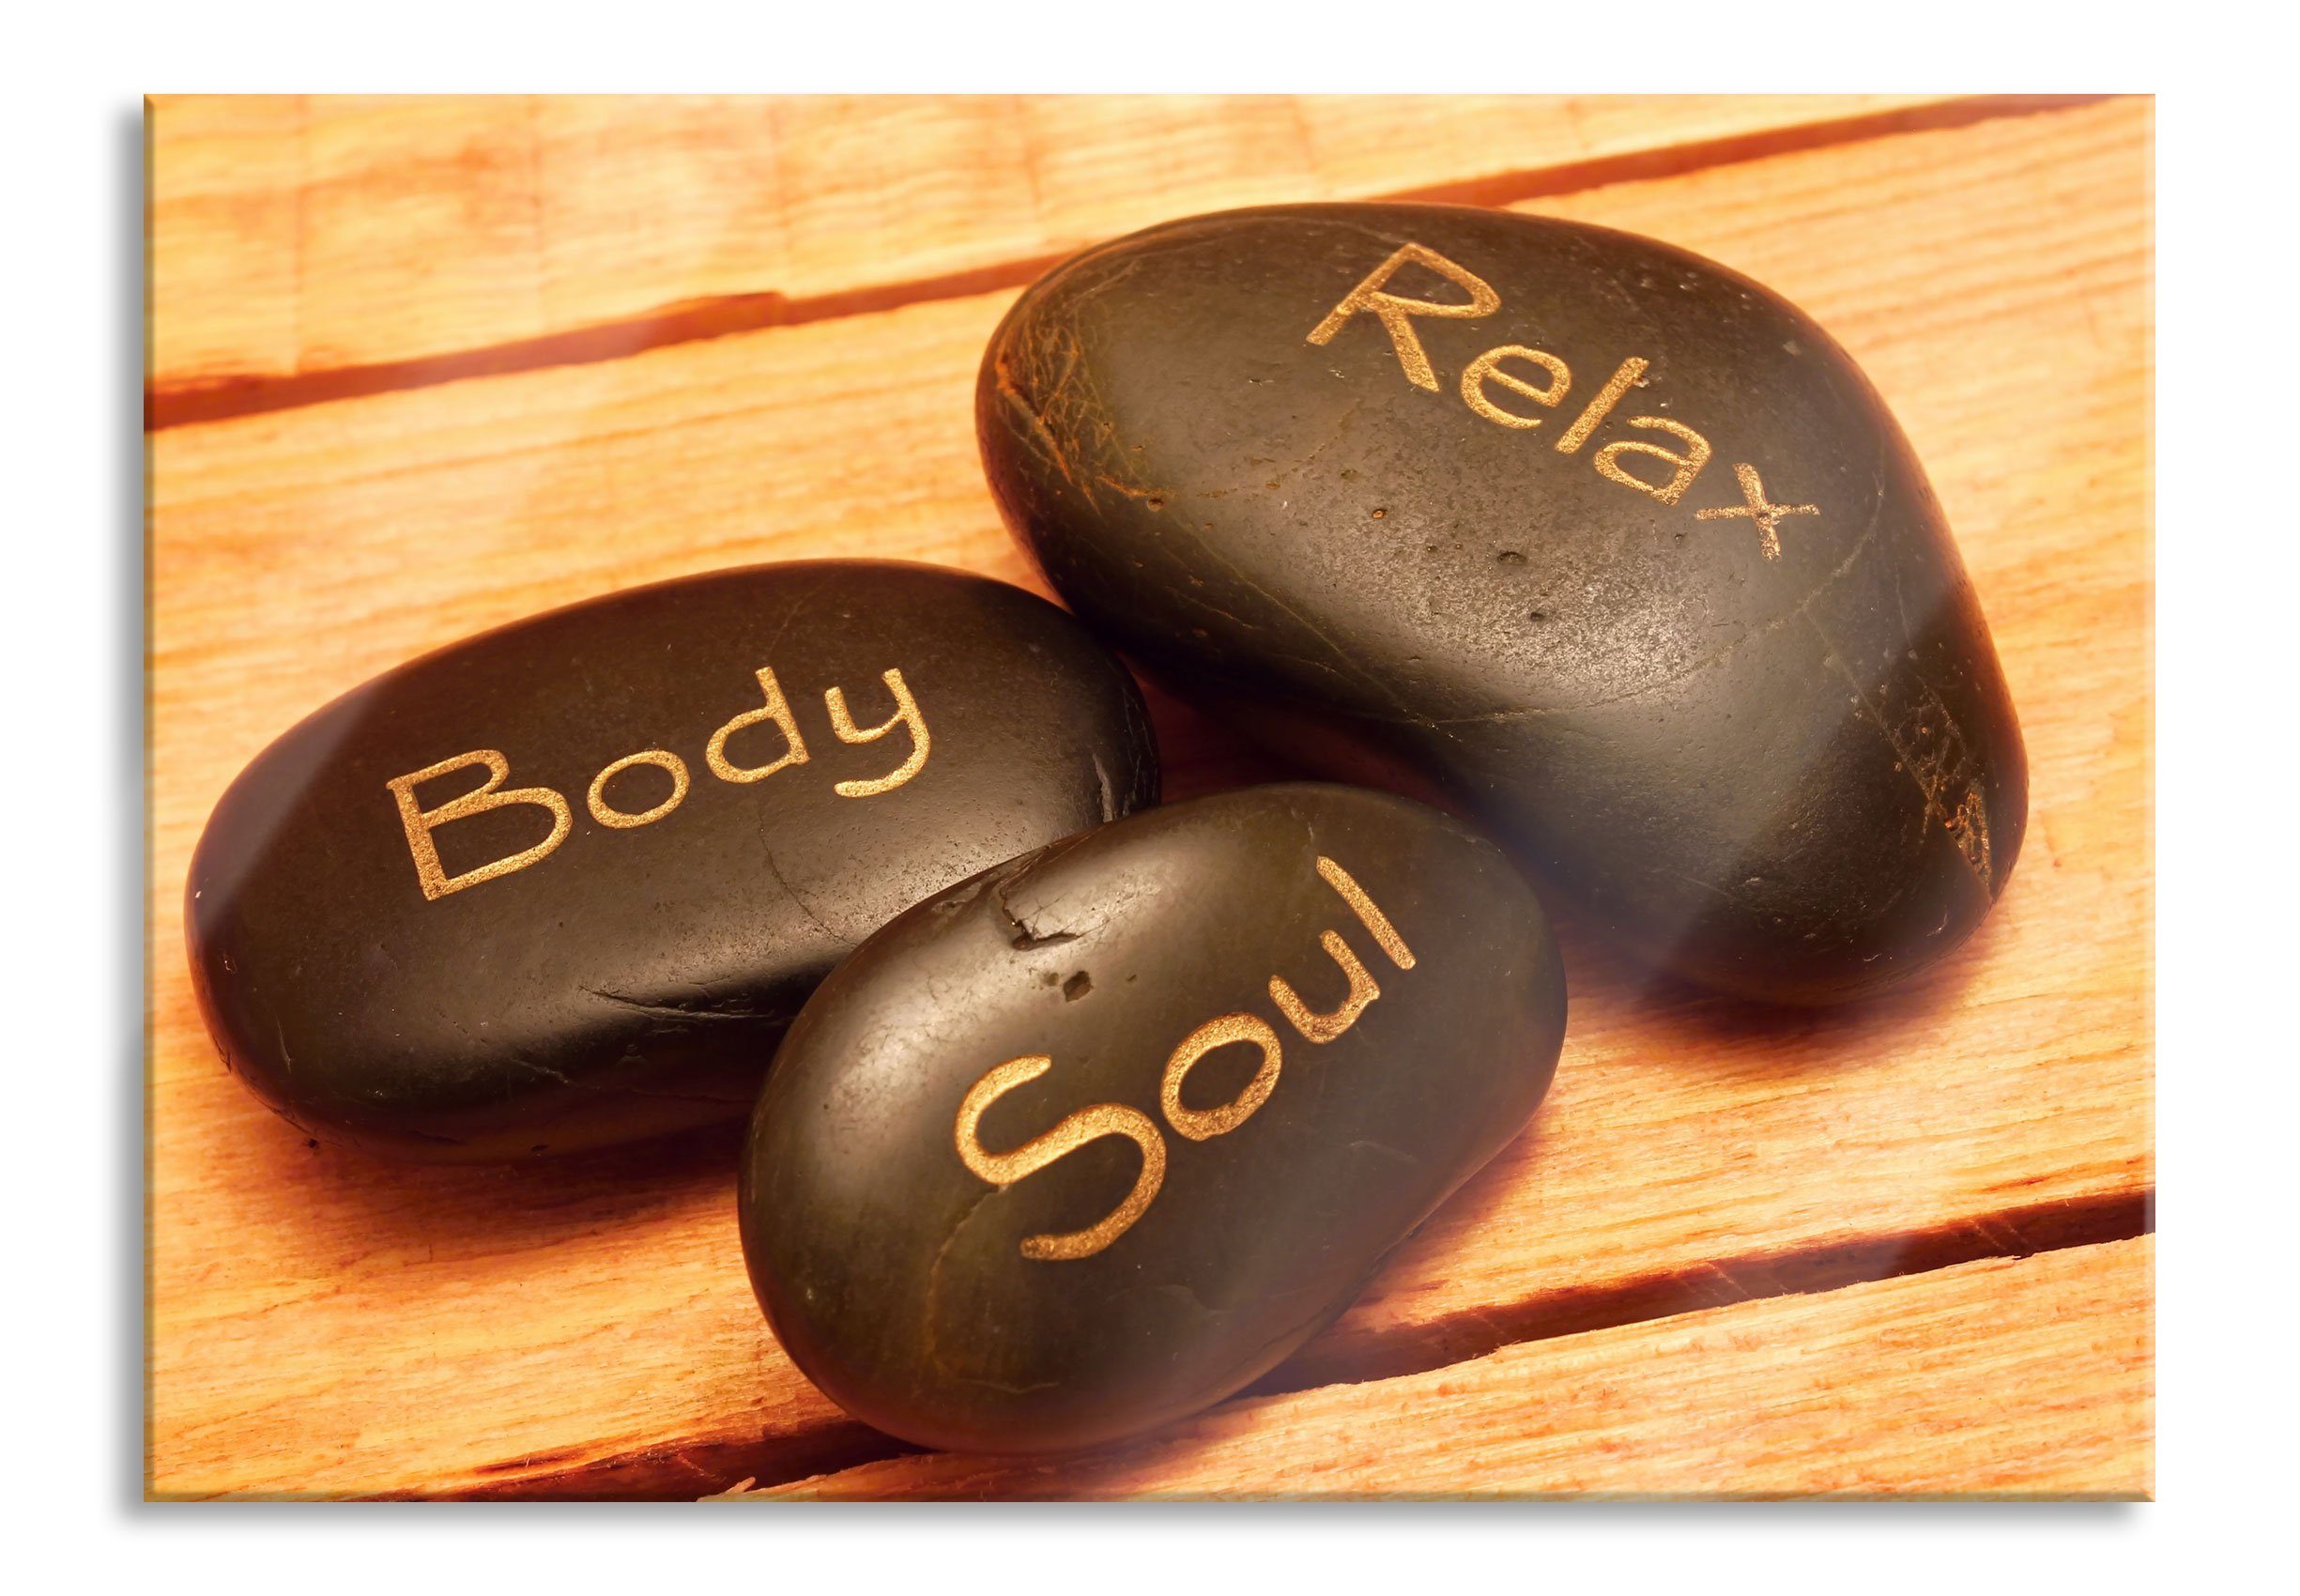 St), Glasbild Wellness Abstandshalter Wellness und (1 Aufhängungen inkl. Body Soul Body Pixxprint Glasbild Soul Relax Relax, aus Echtglas,